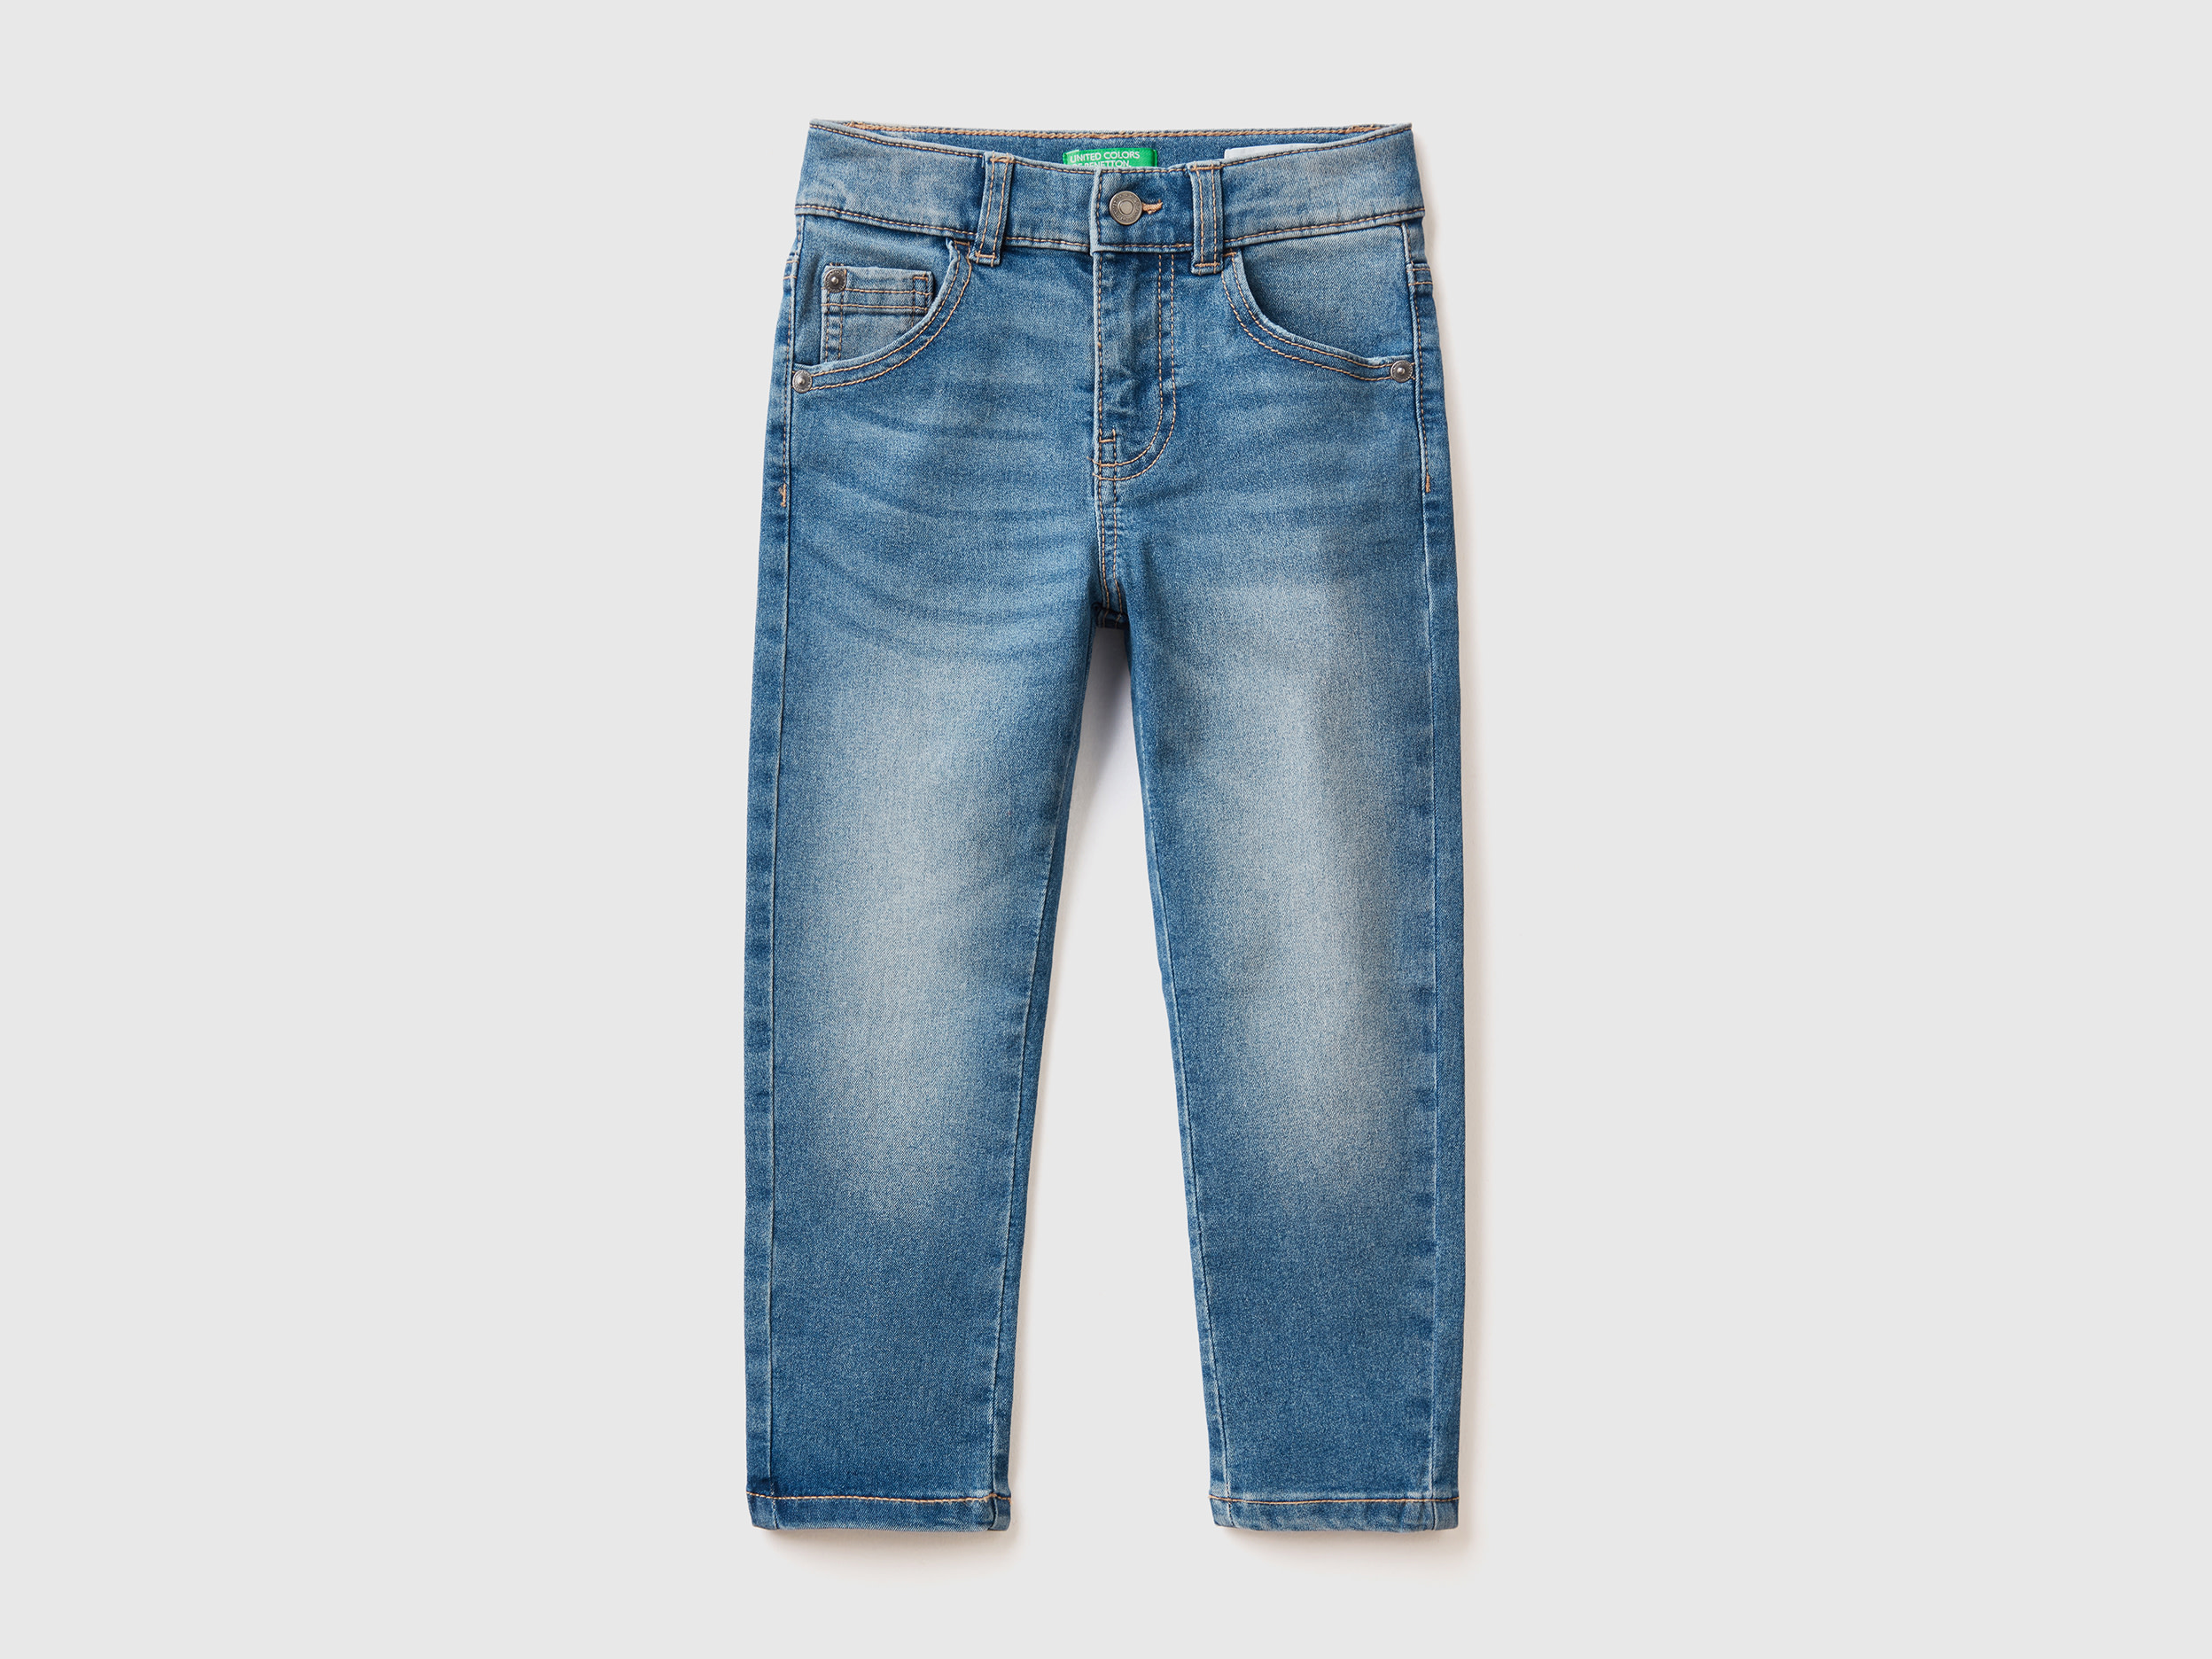 Benetton, Vintage Look Skinny Fit Jeans, size 5-6, Sky Blue, Kids